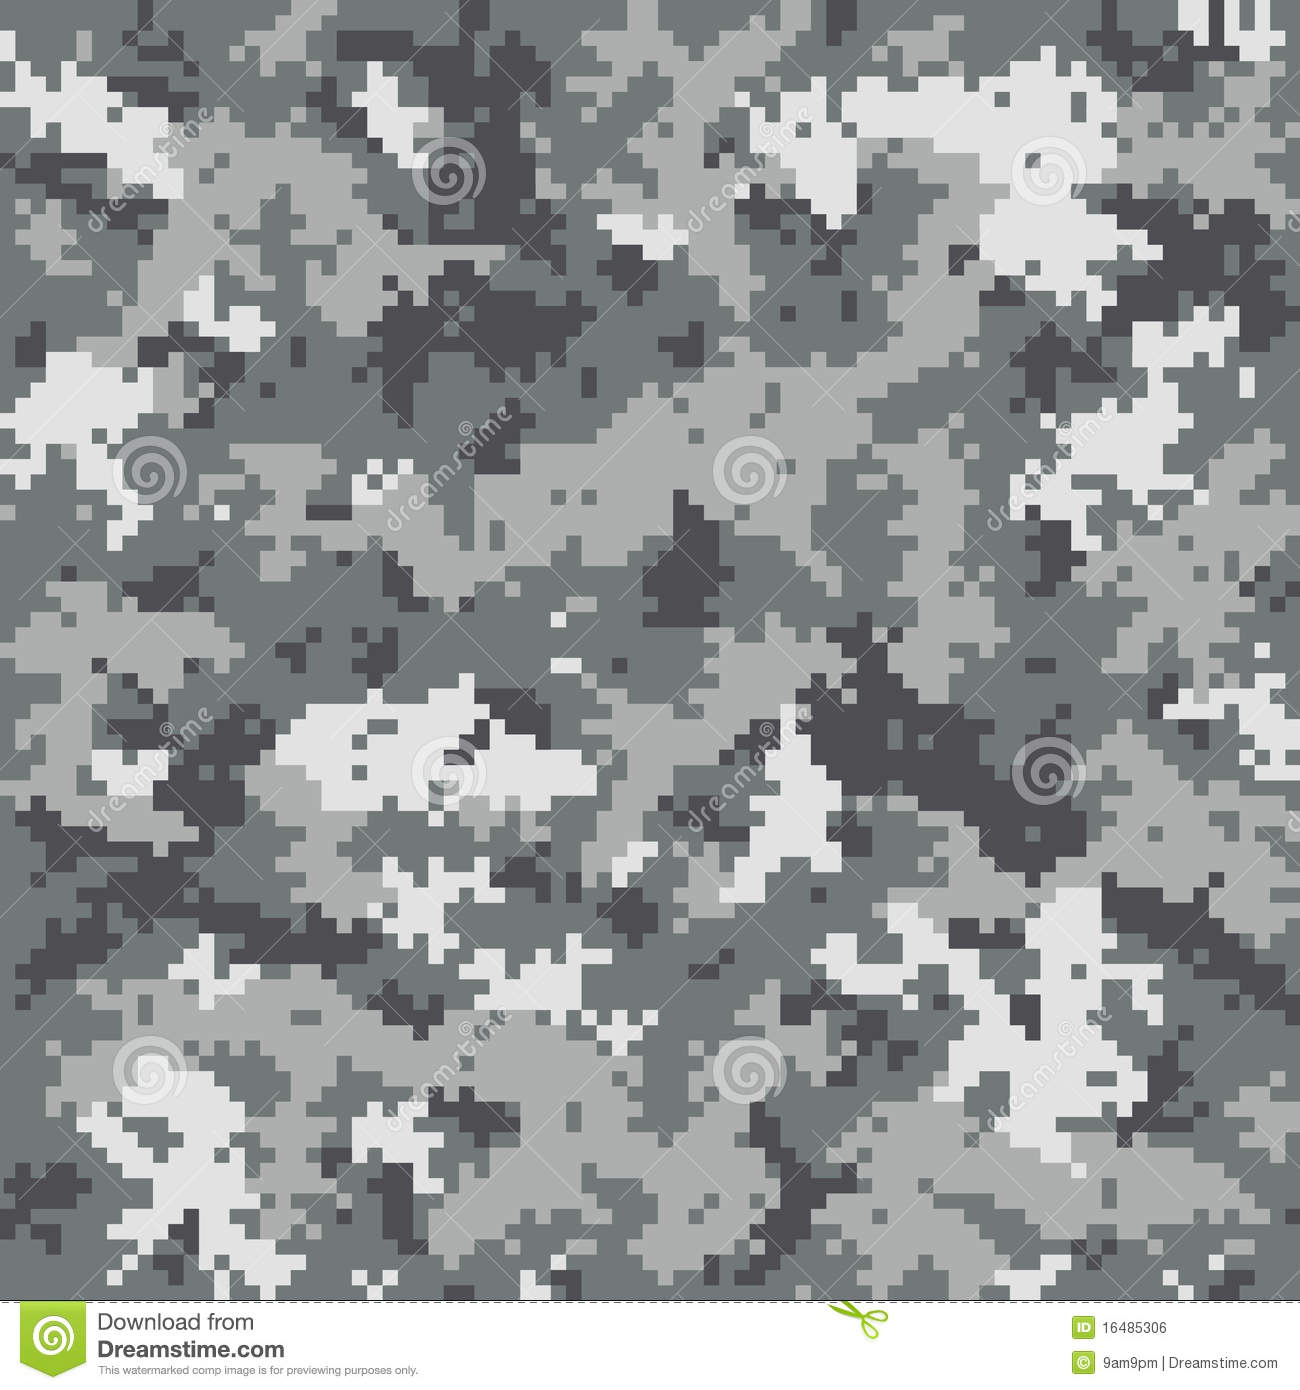 digital camo wallpaper,military camouflage,pattern,camouflage,uniform,design